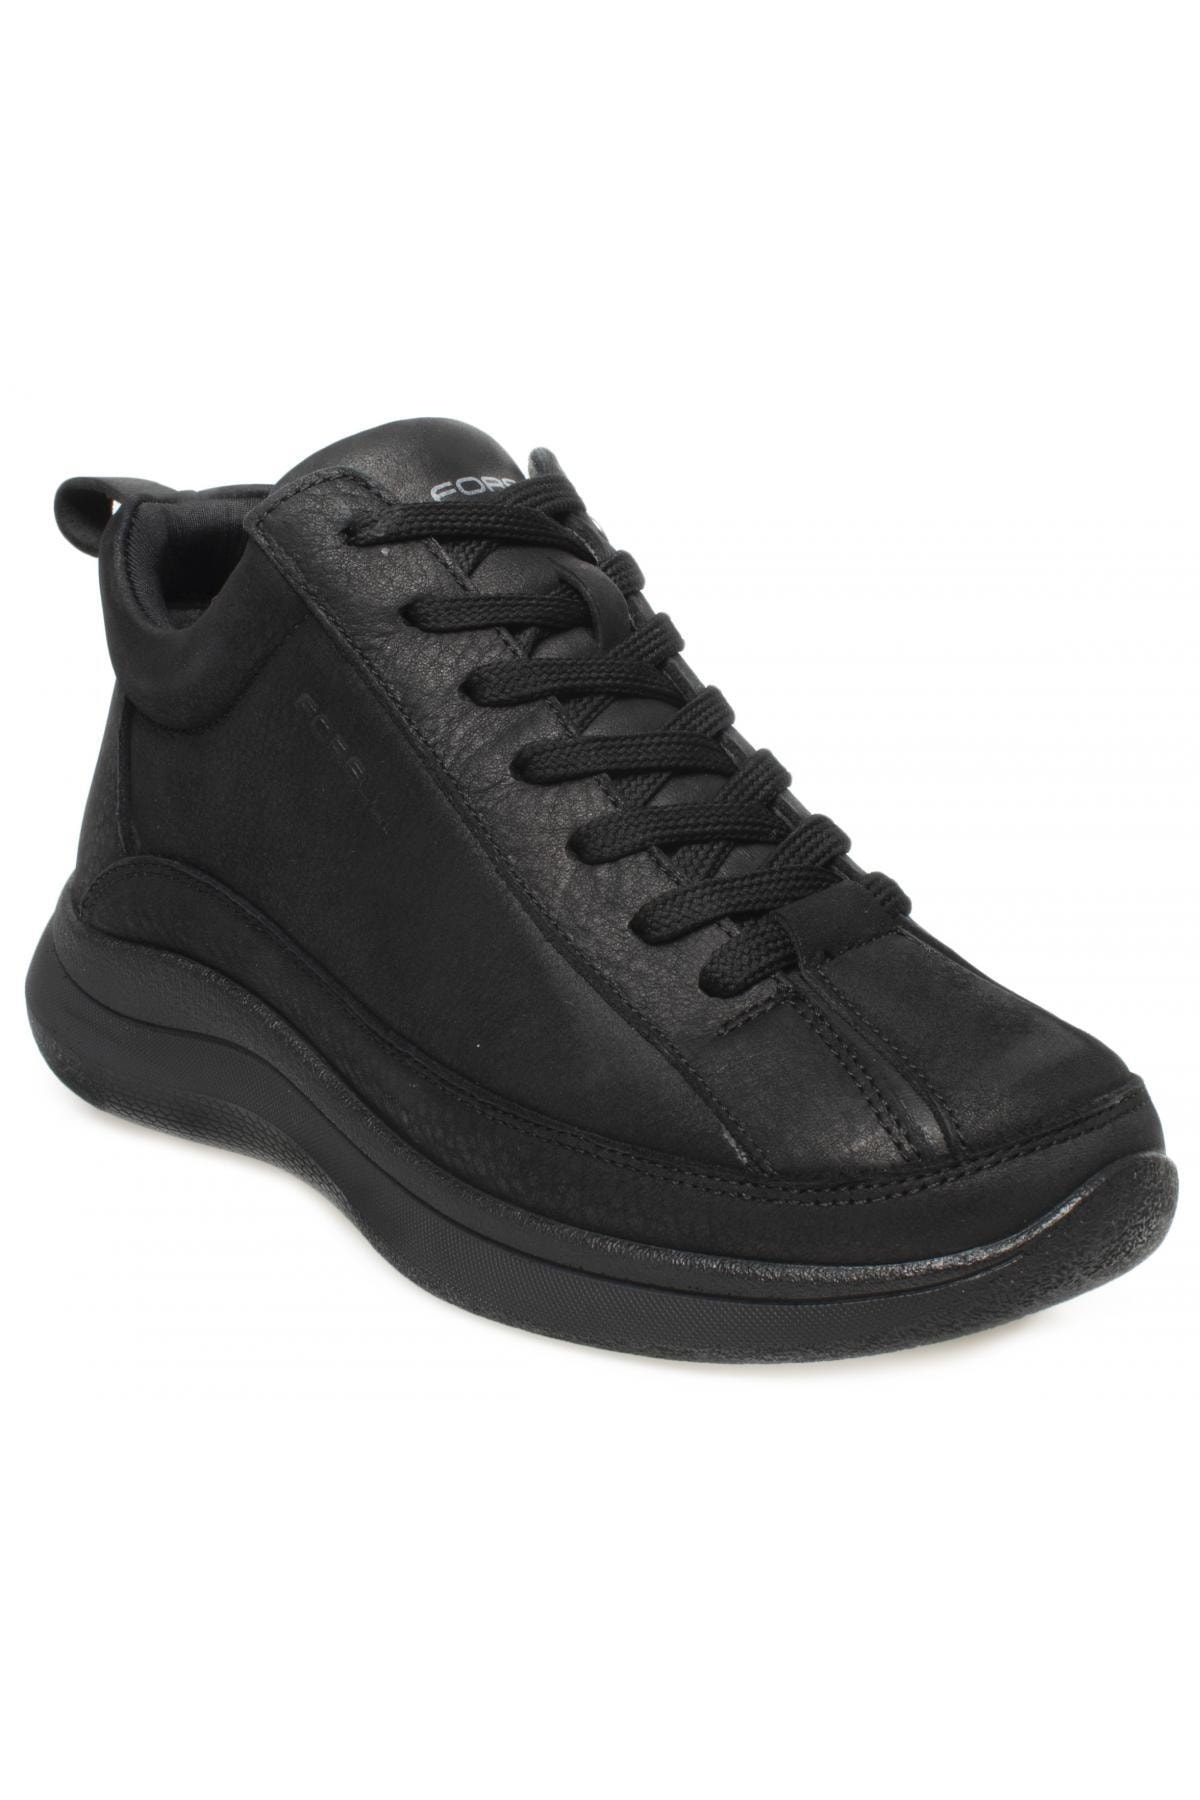 Forelli Neva 27954 Comfort Leather Black Women's Boots.